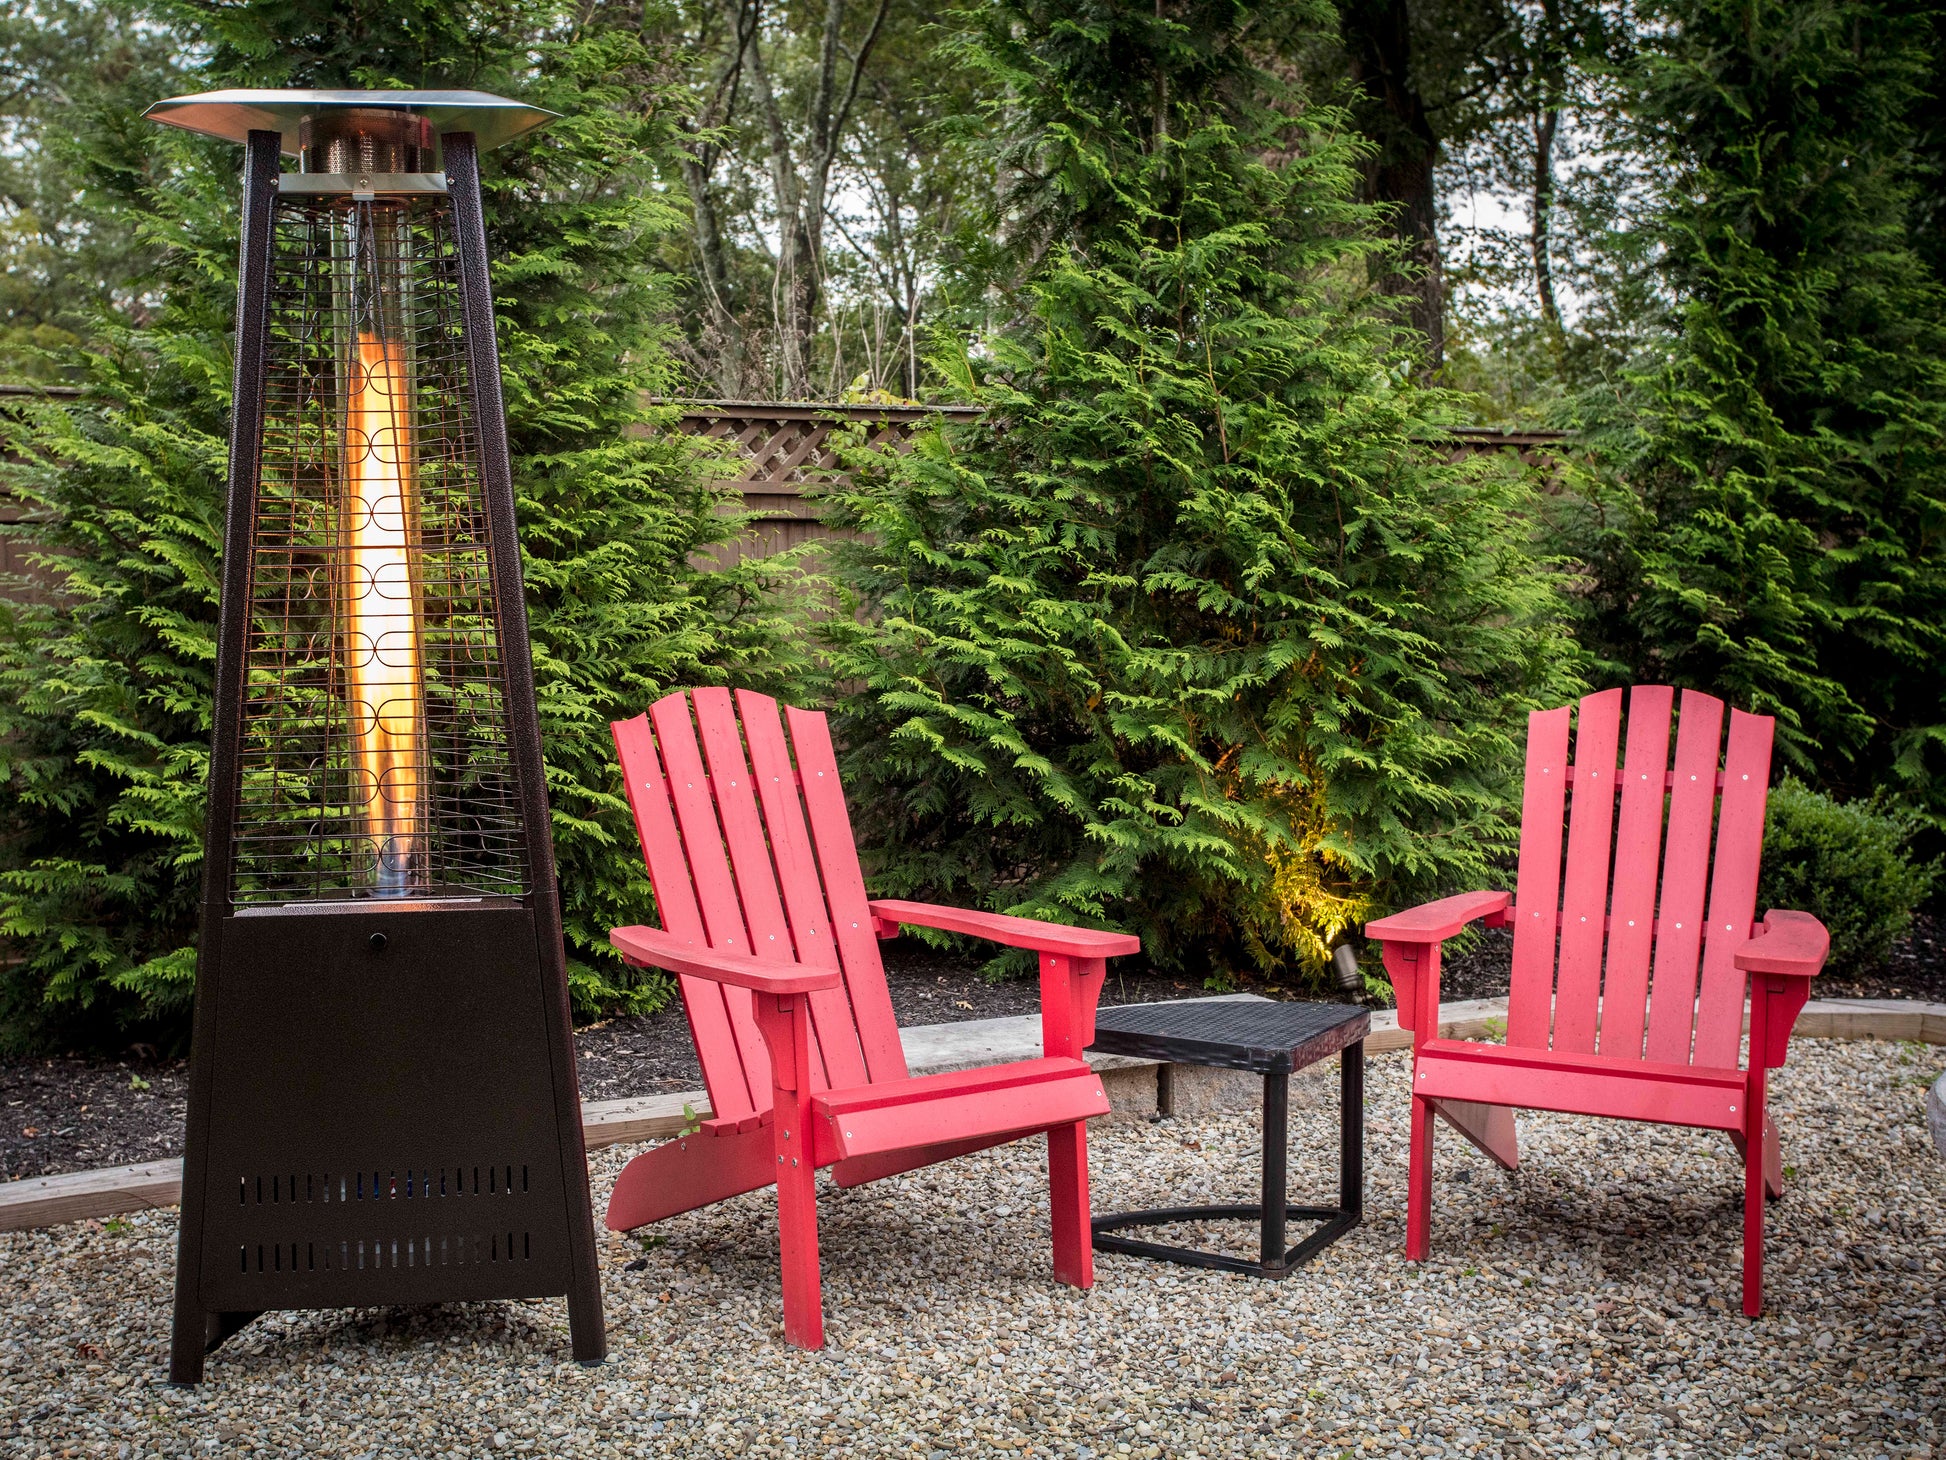 Boost Propane Patio Heater in backyard with red Adirondack chairs in lush backyard